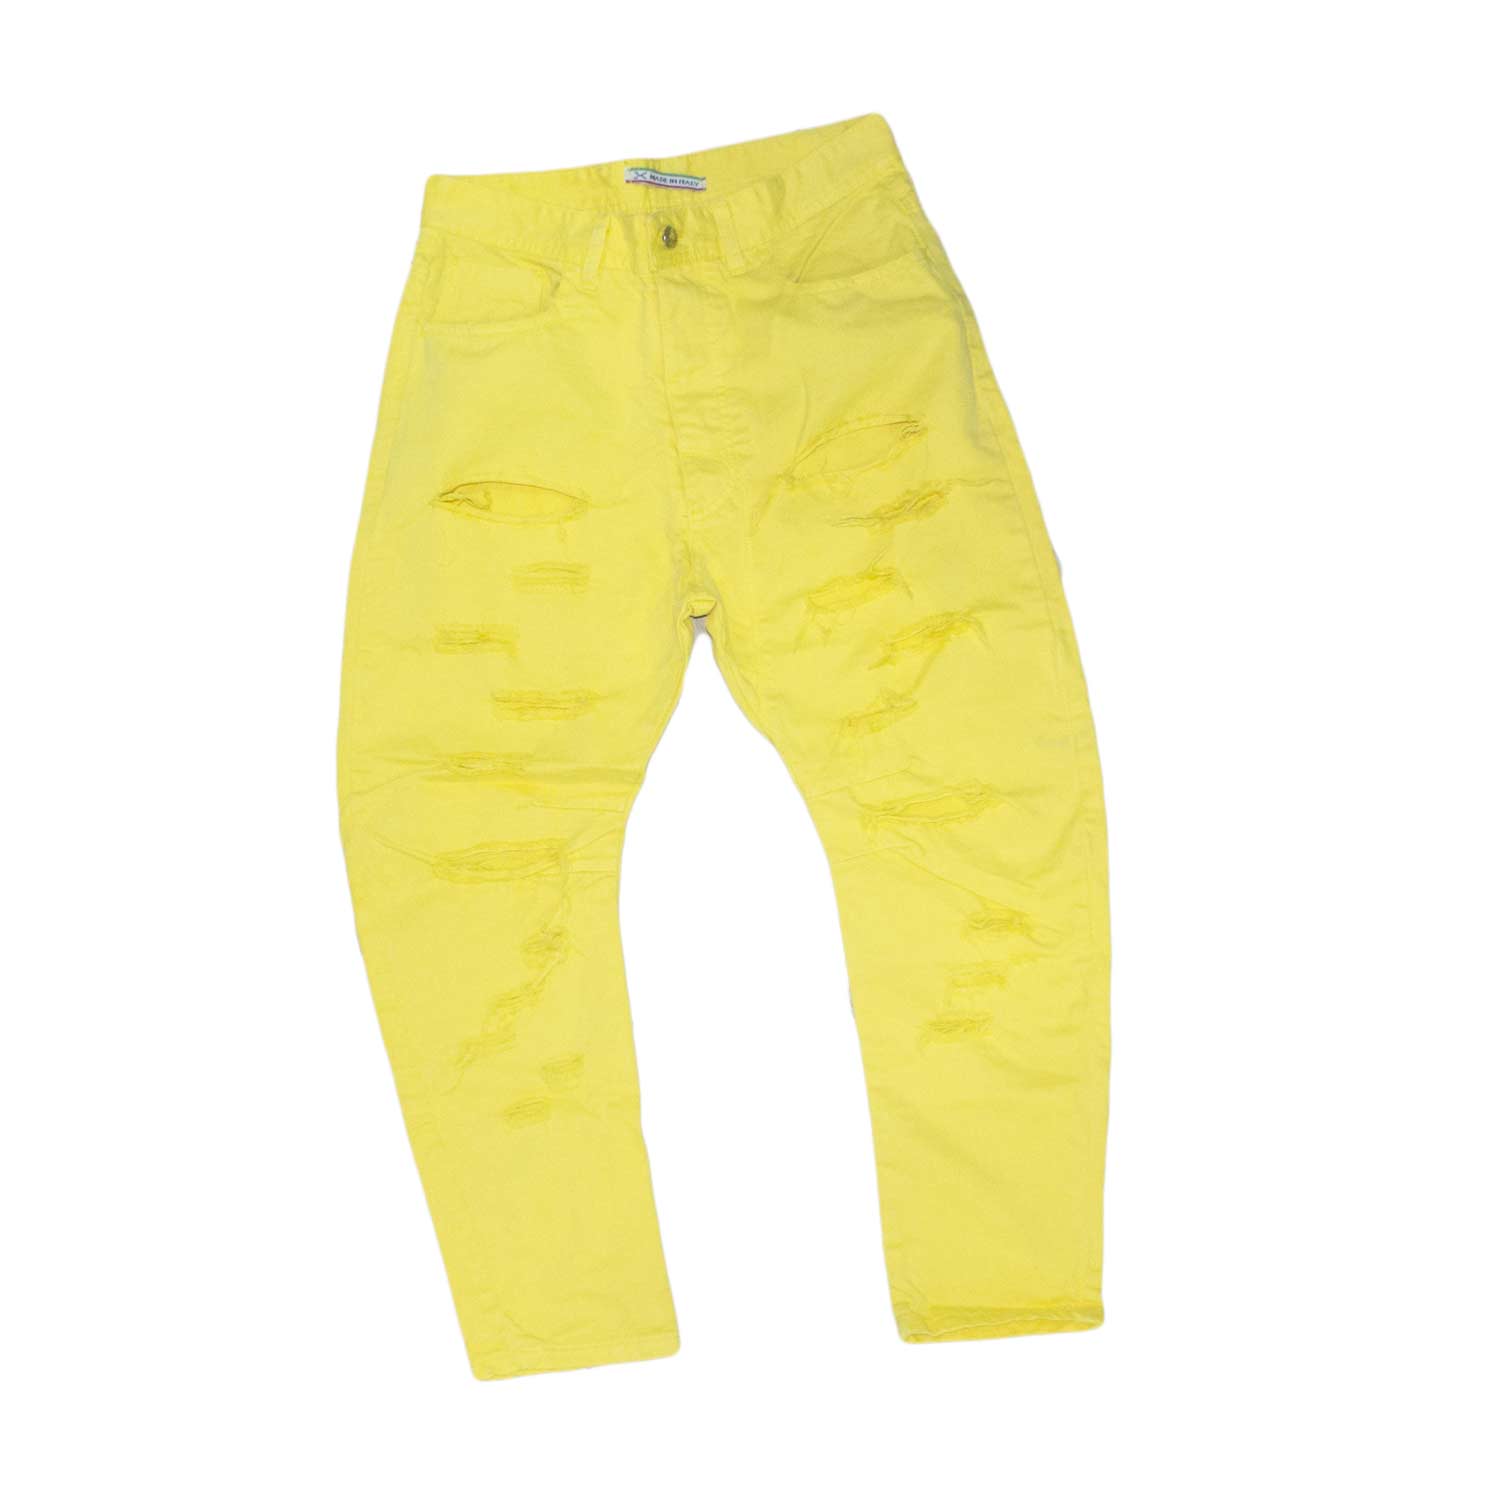 pantaloni uomo man giallo yellow stracci made in italy.